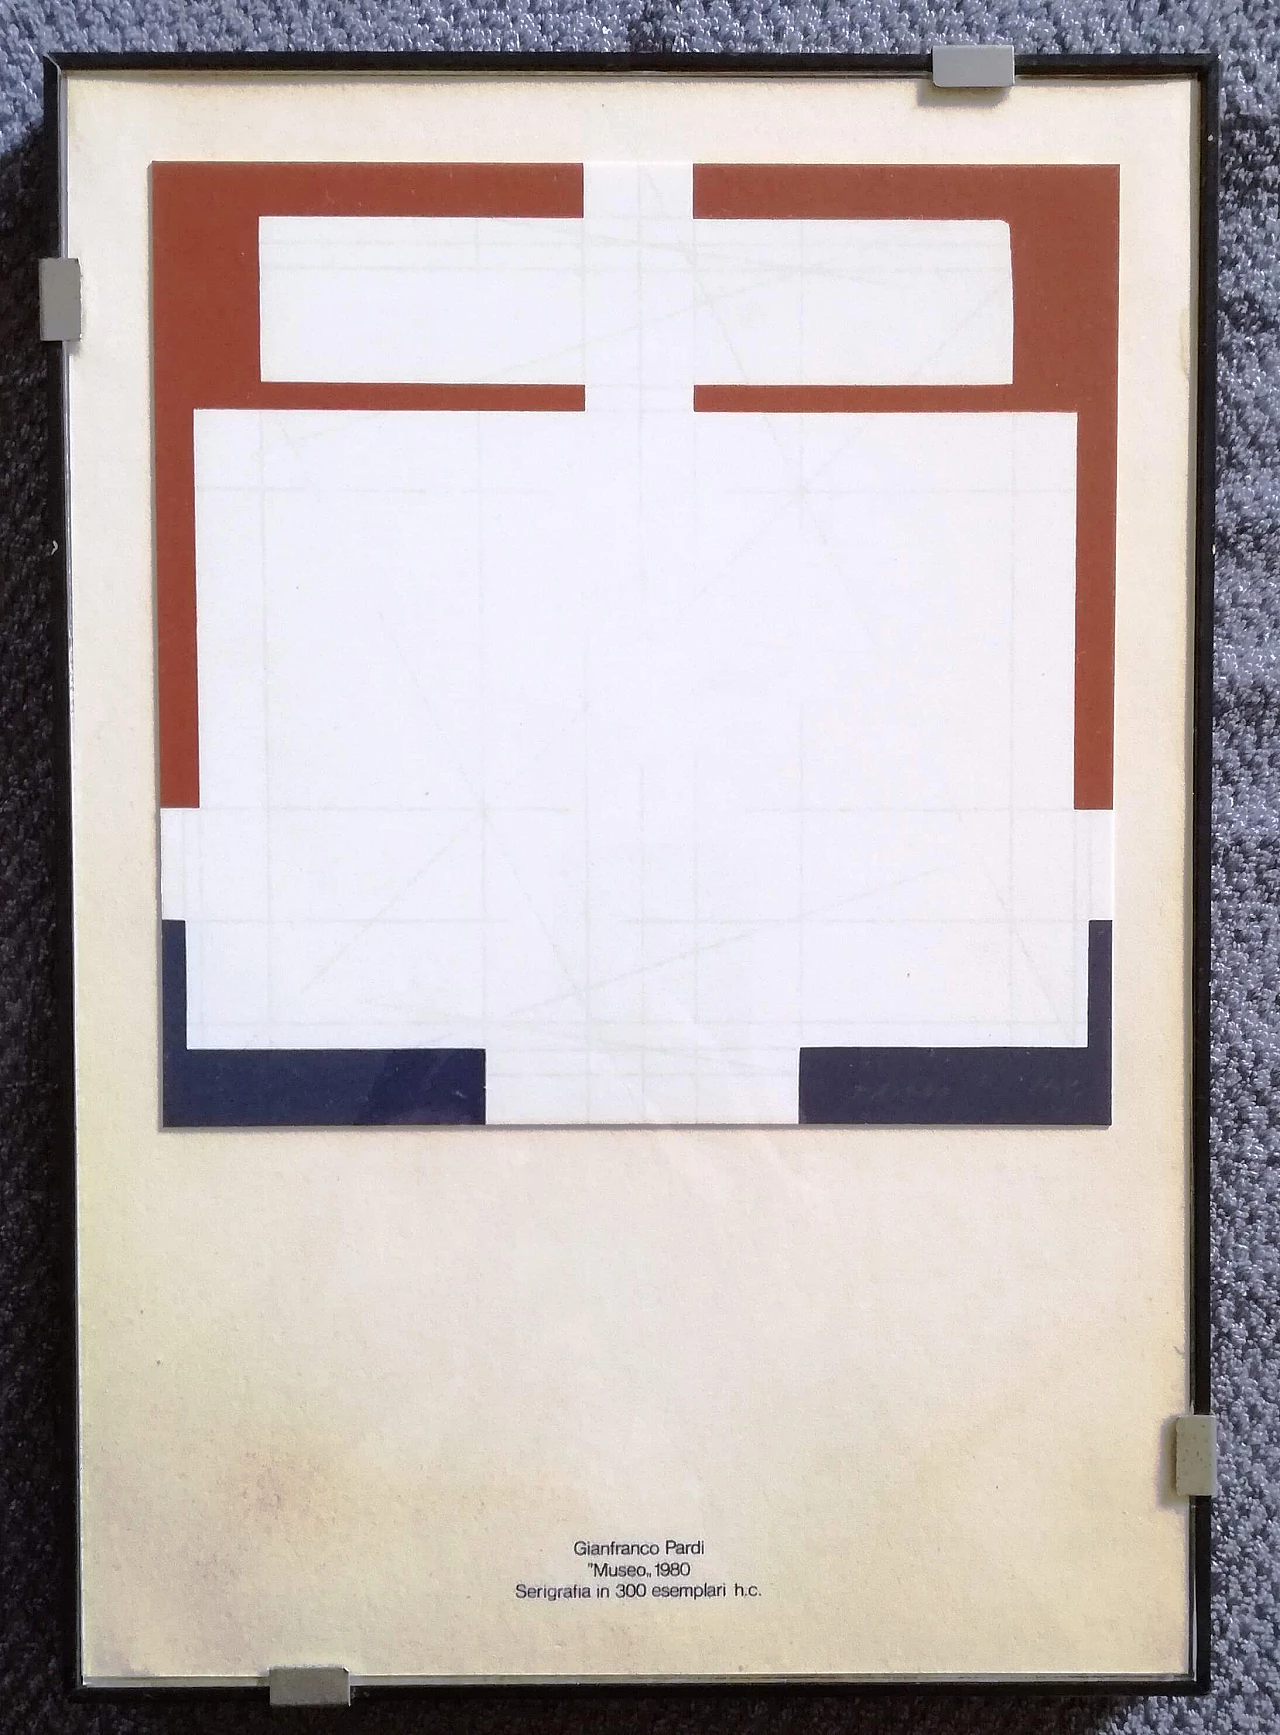 Gianfranco Pardi, Museo, serigrafia, 1980 1